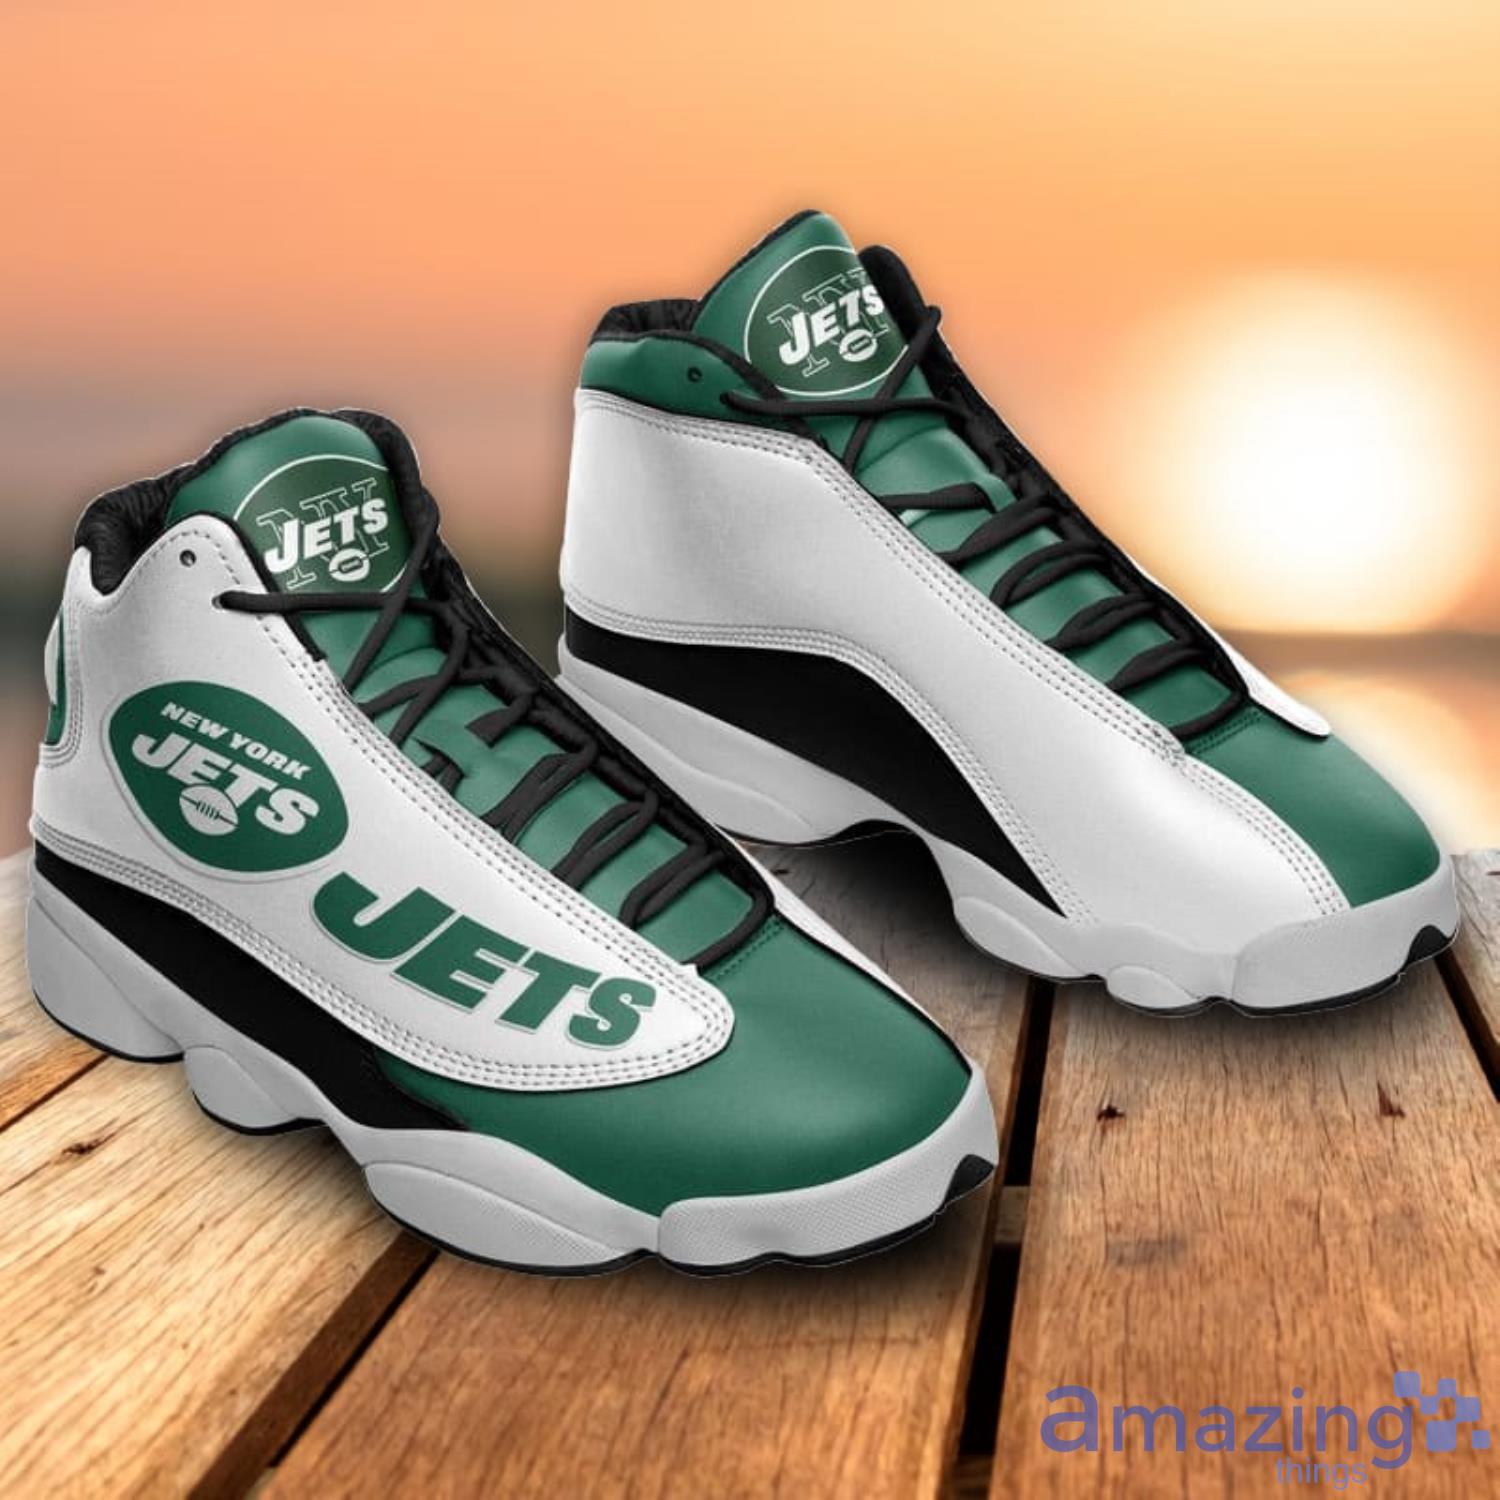 Nfl York Jets Air Jordan 13 Shoes For Fans Sneakers